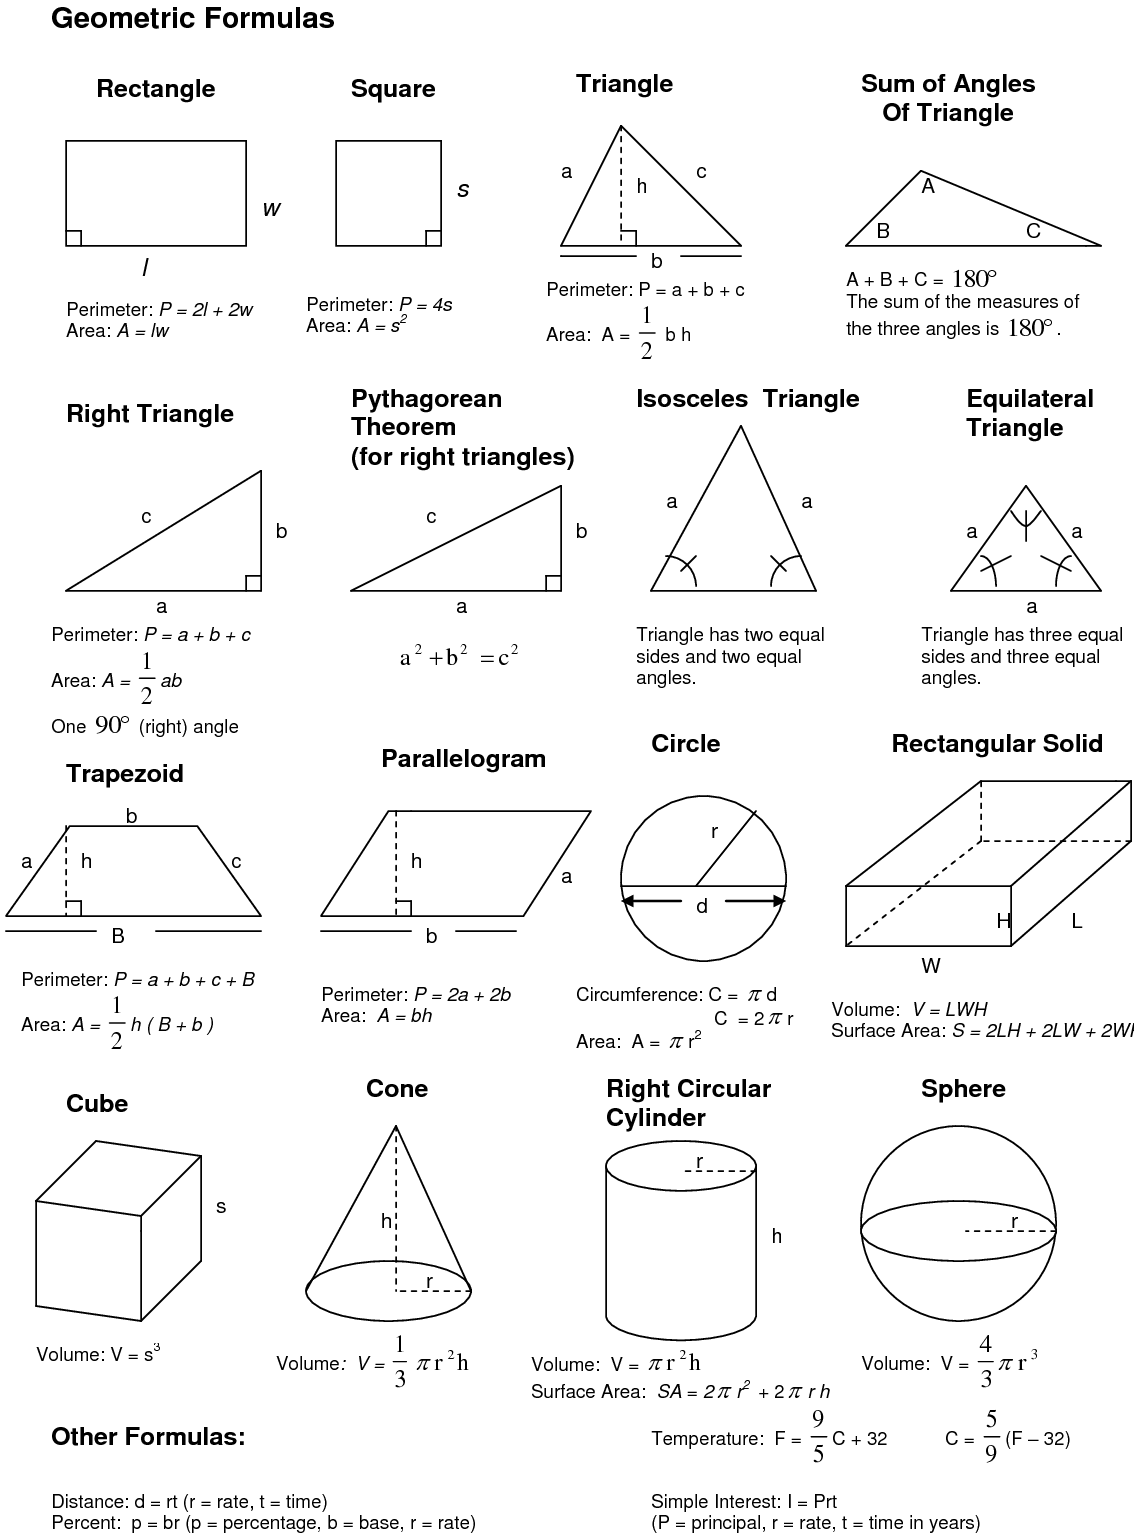 geometrical-formulas